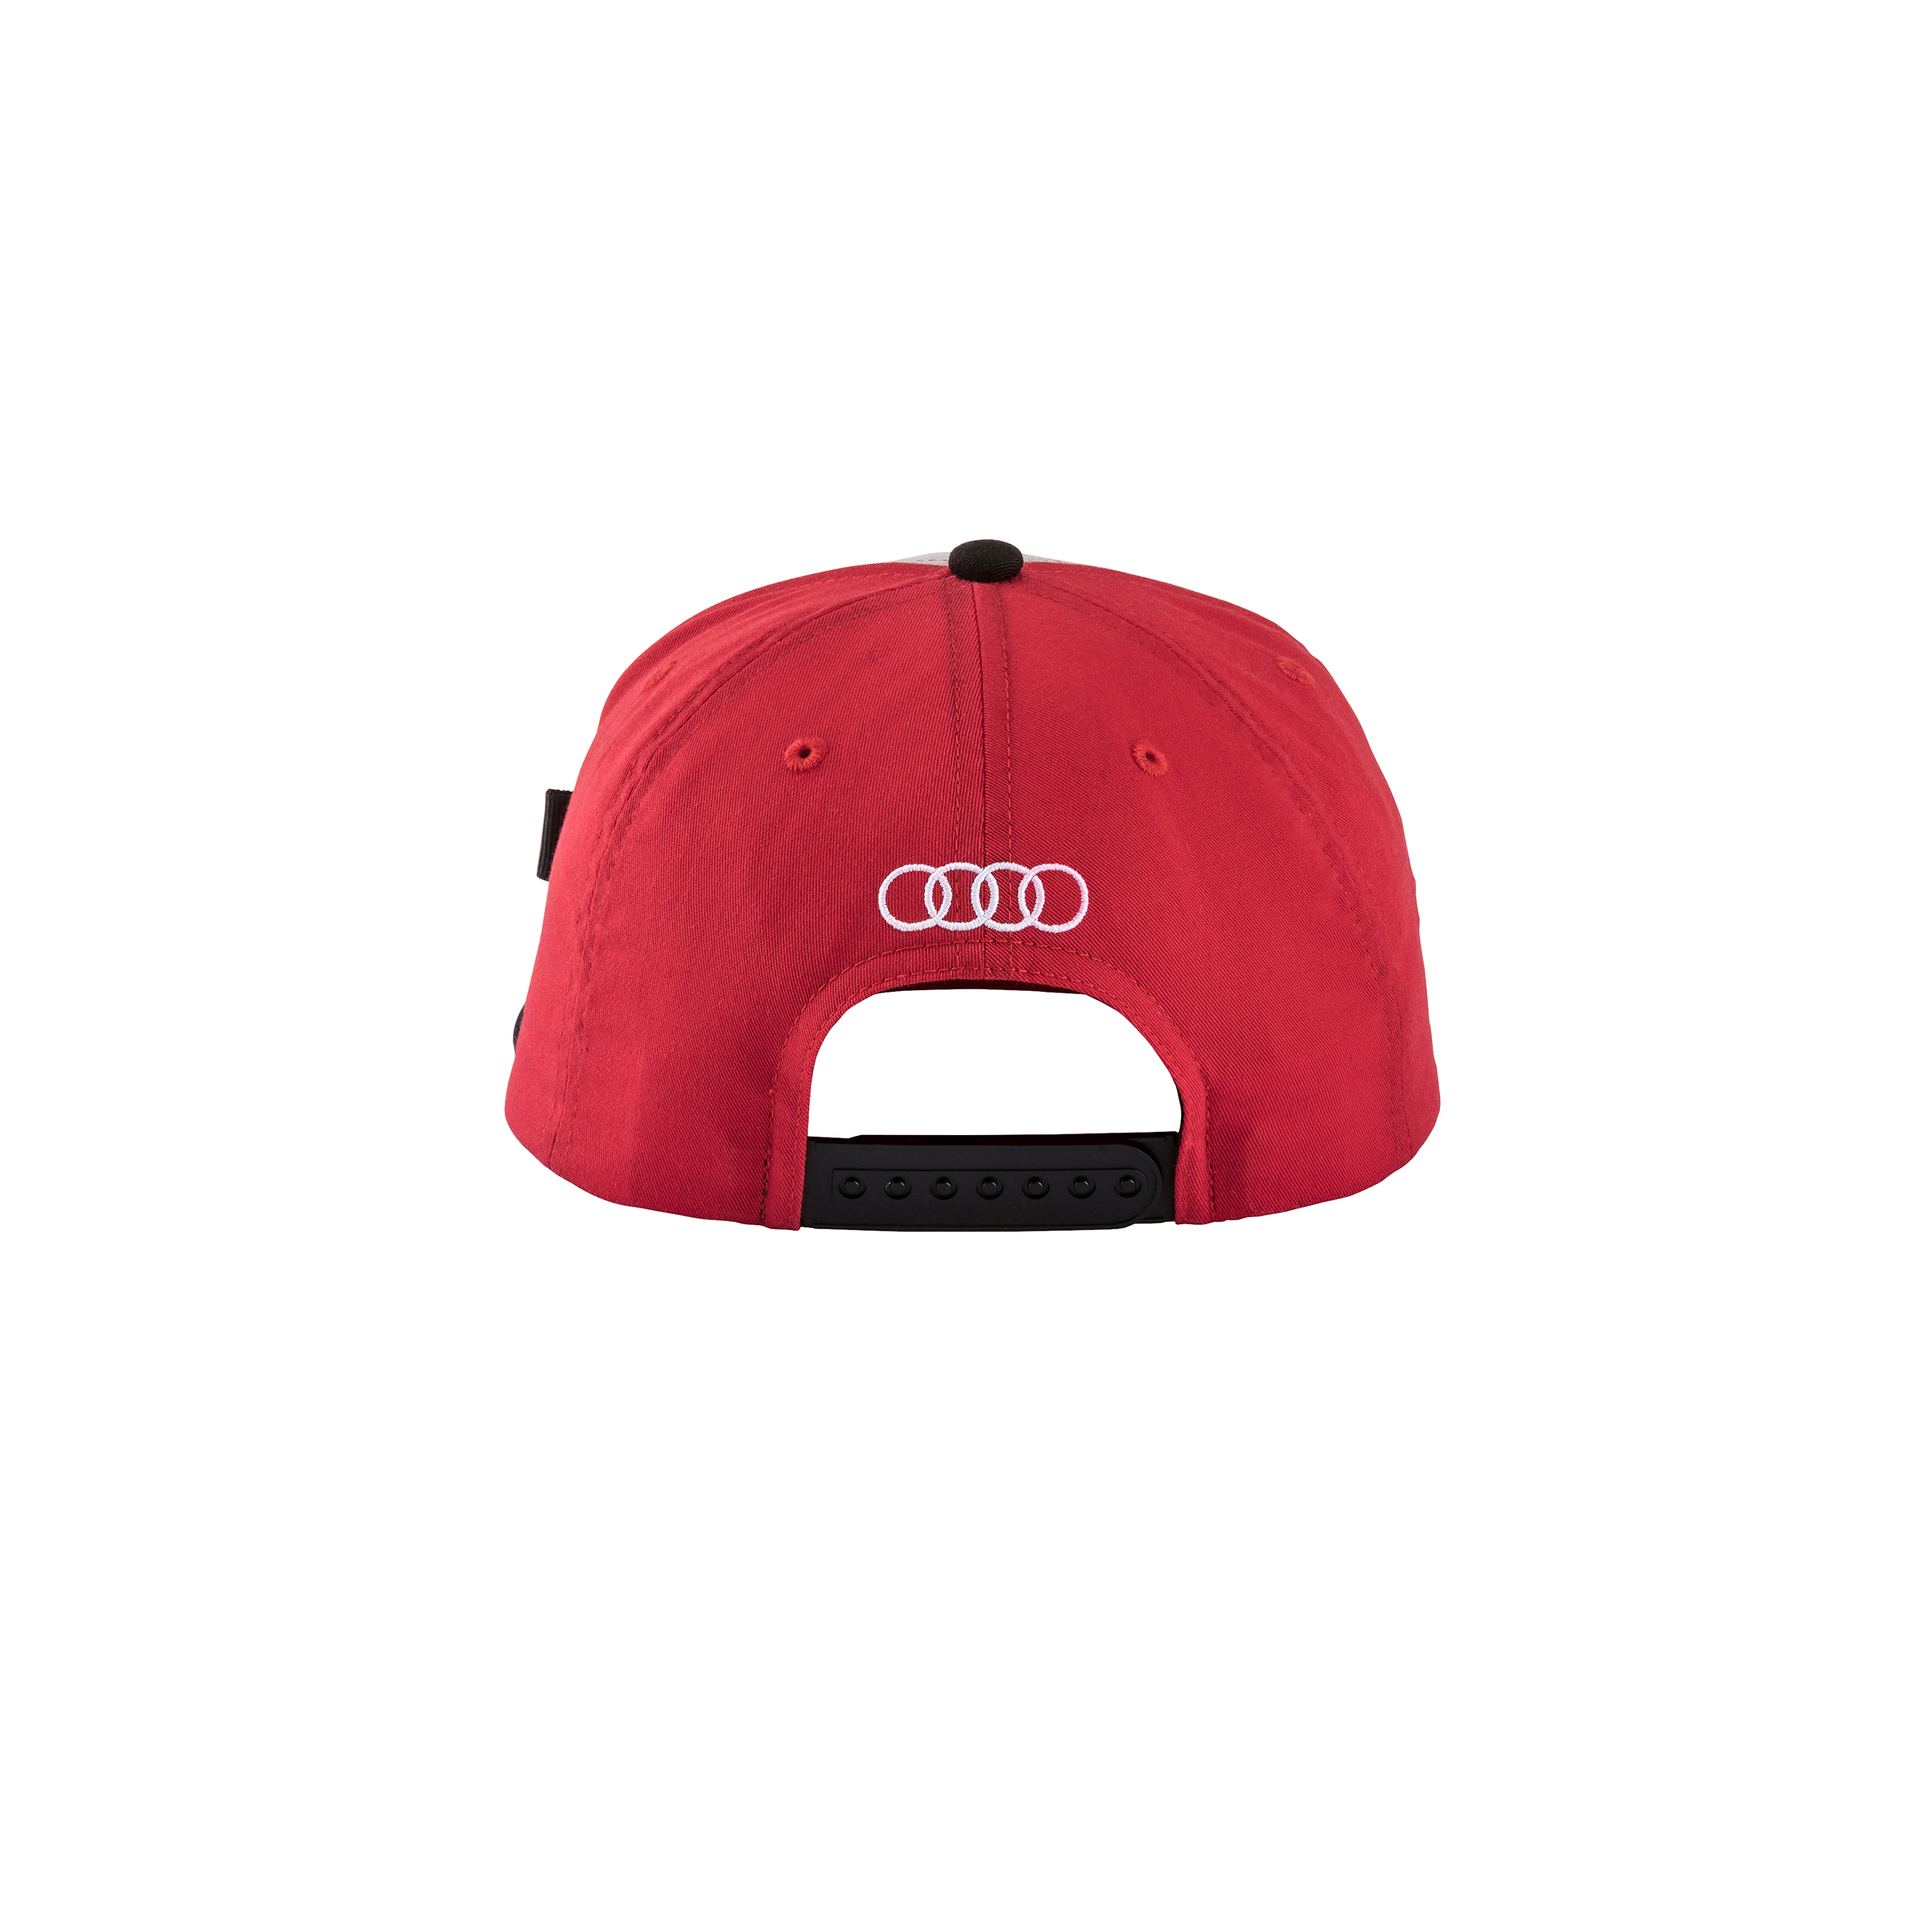 Audi Cap ADUI, Kinder, grau/rot